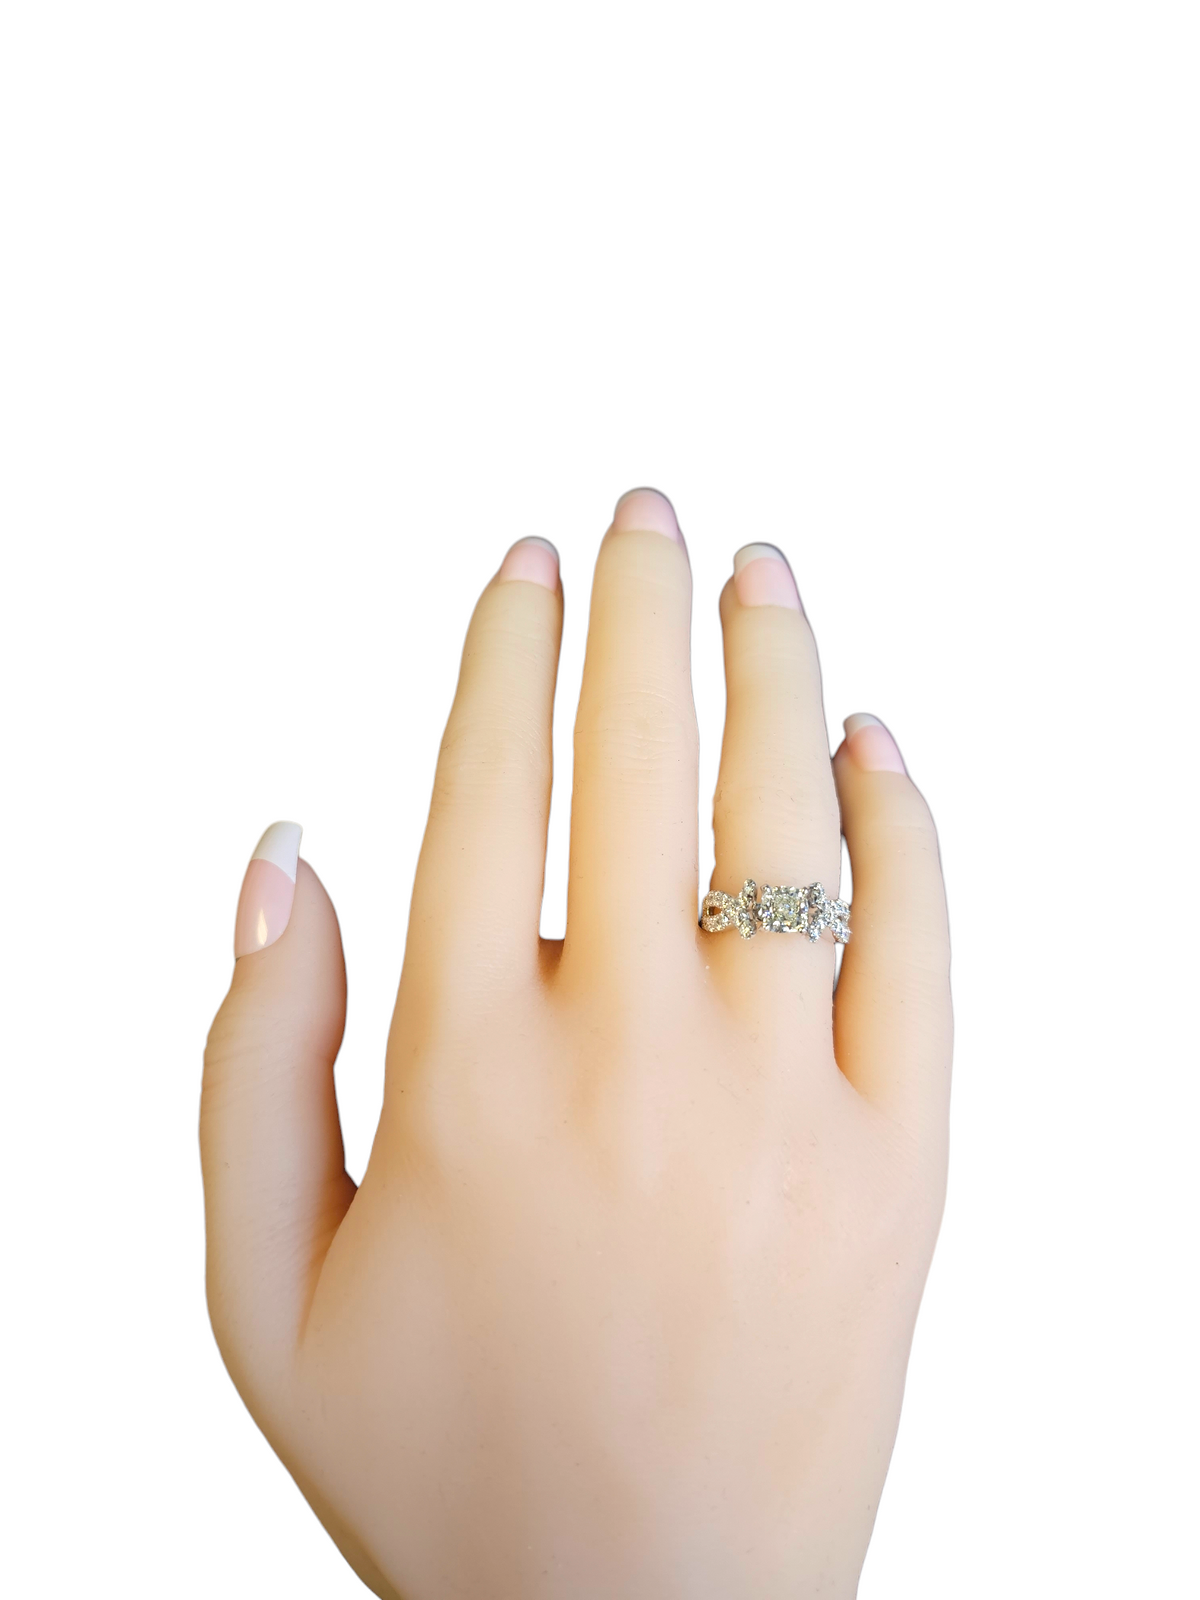 14Kt White Gold and Platinum Diamond Engagement Ring